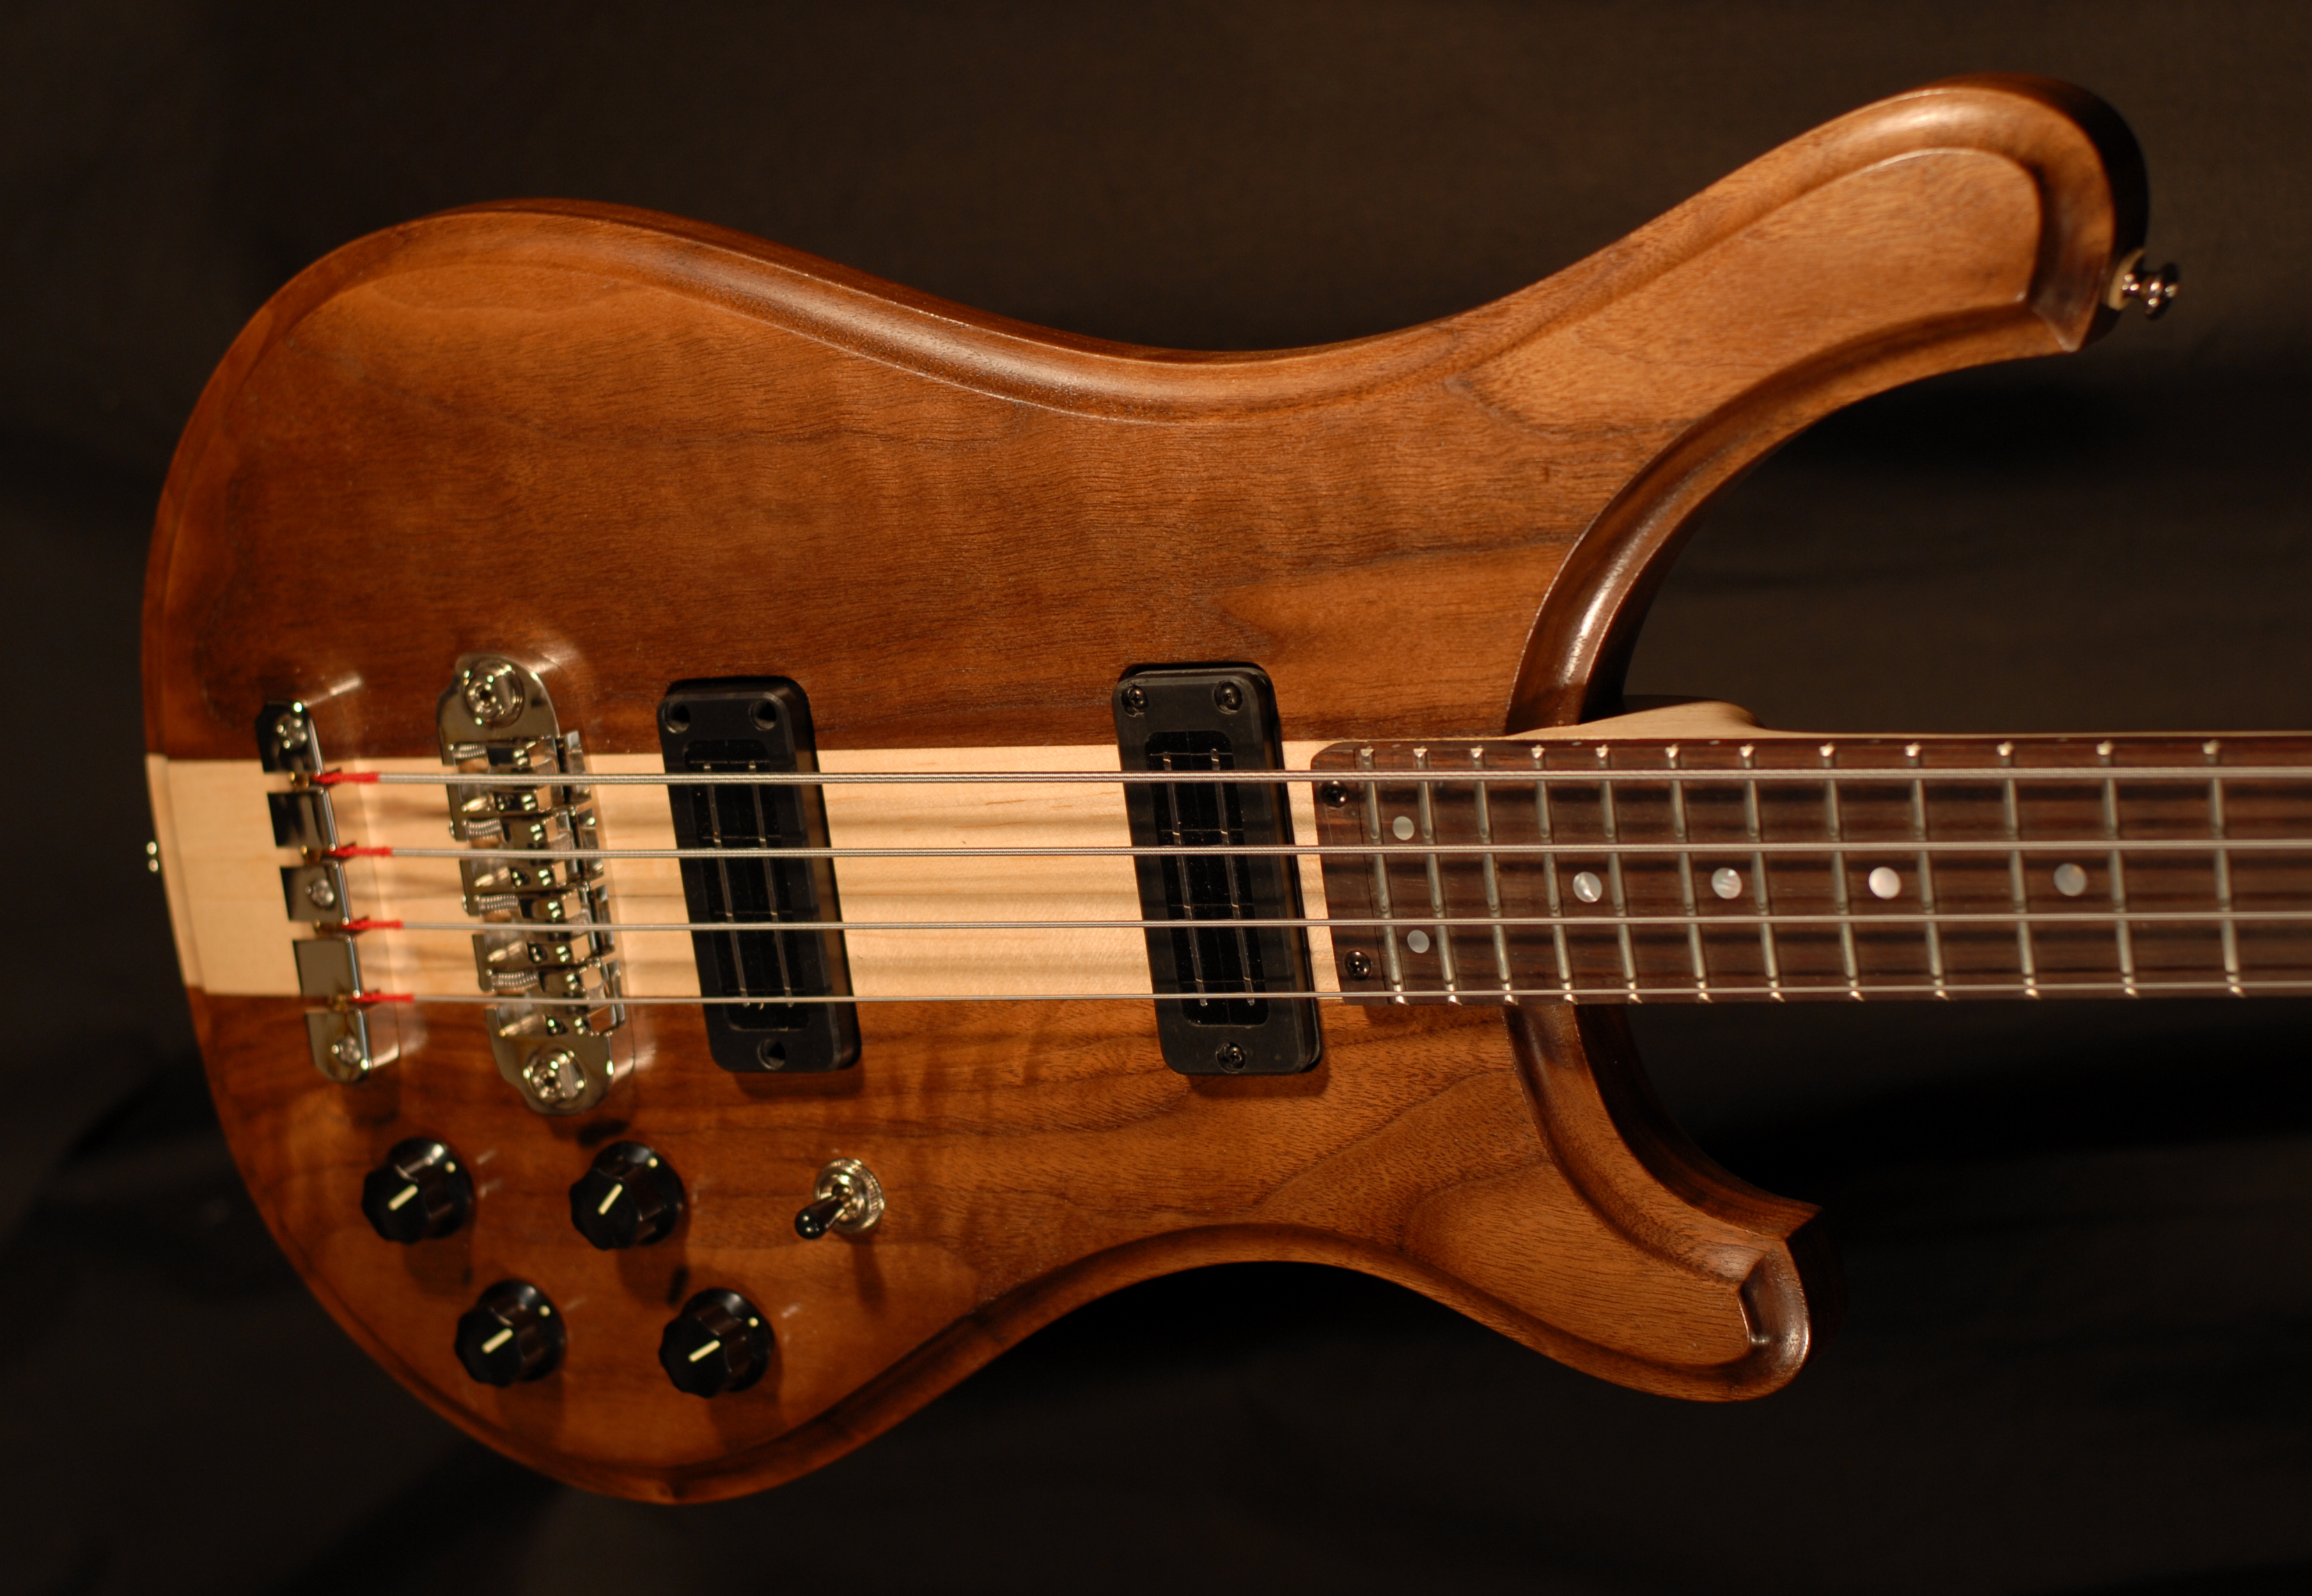 detailed front view of michael mccarten's double cutaway electric bass guitar model